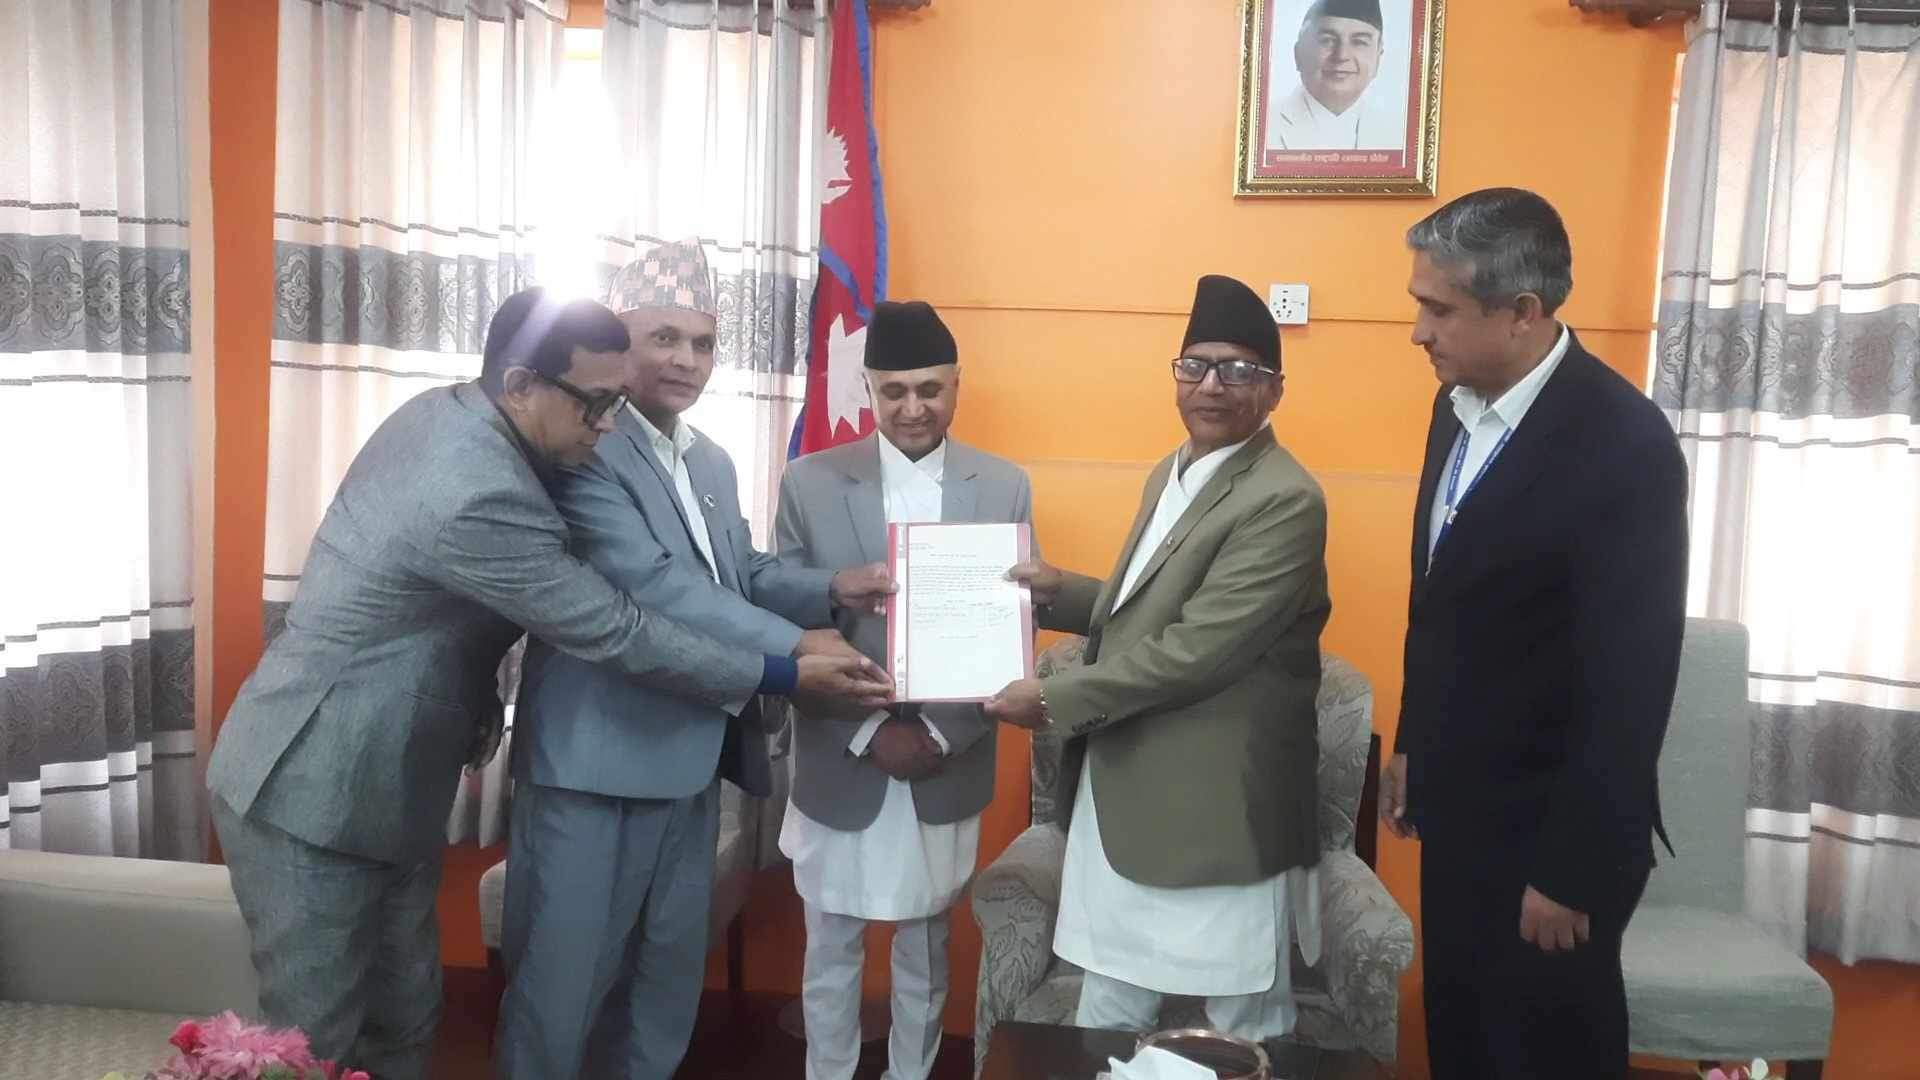 CPN-UML's Khagaraj Adhikari eyes Chief Minister role in Gandaki Province